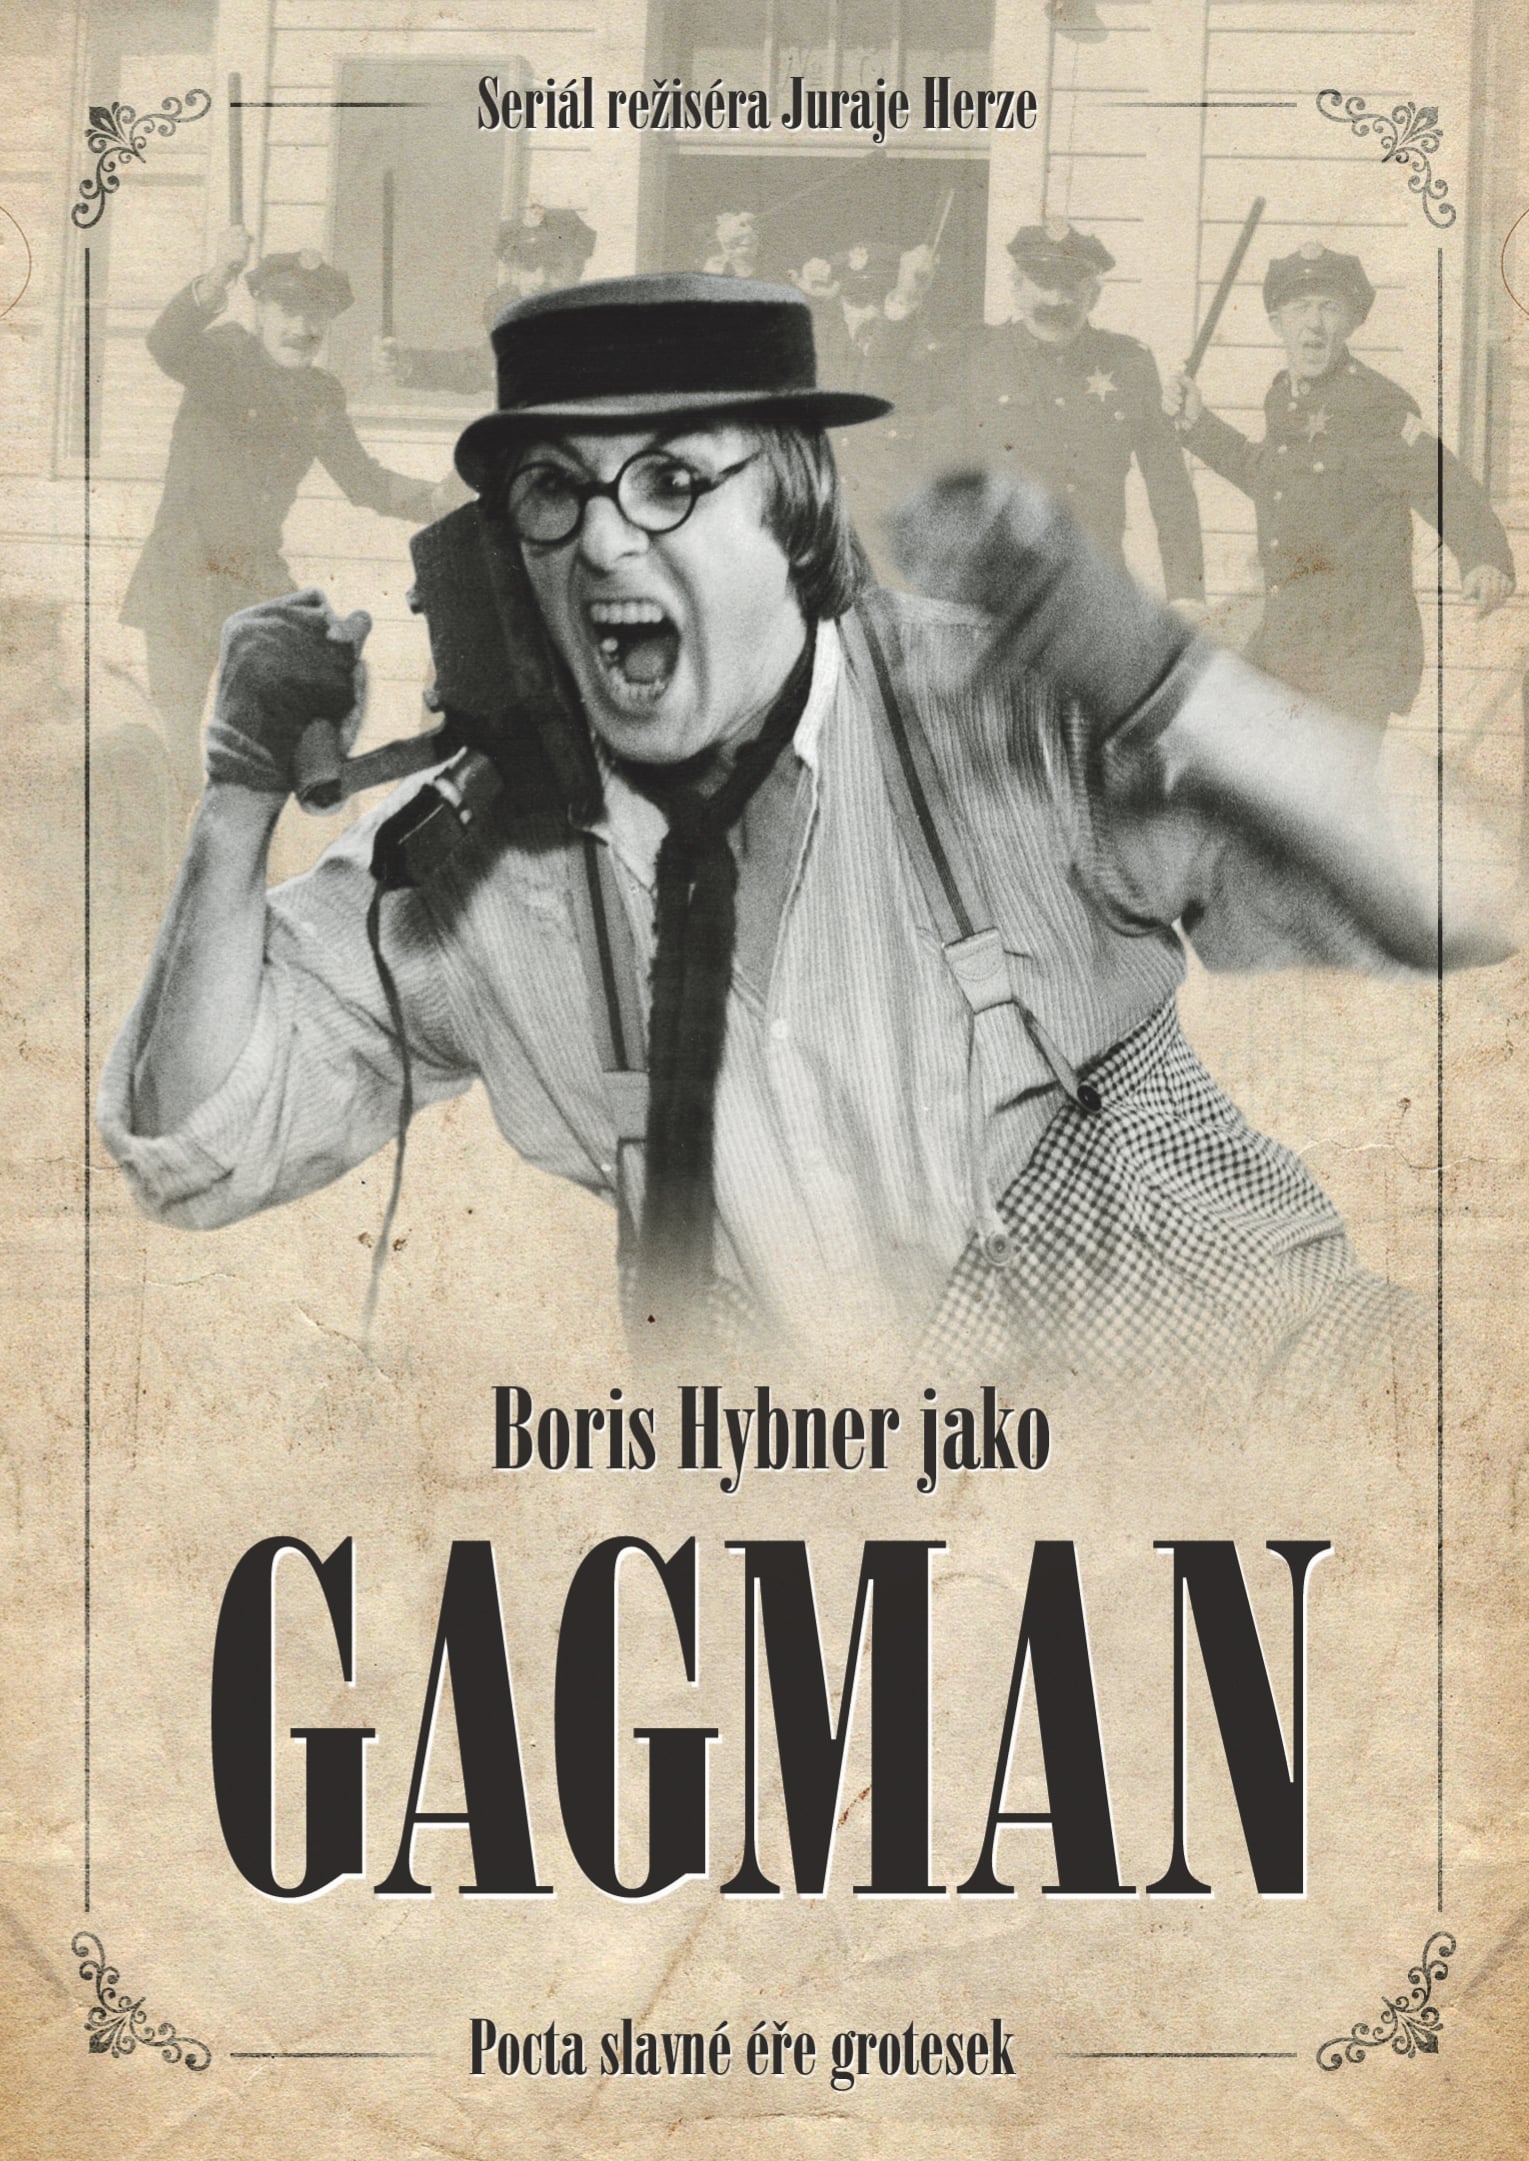 Plakát pro film “Gagman”